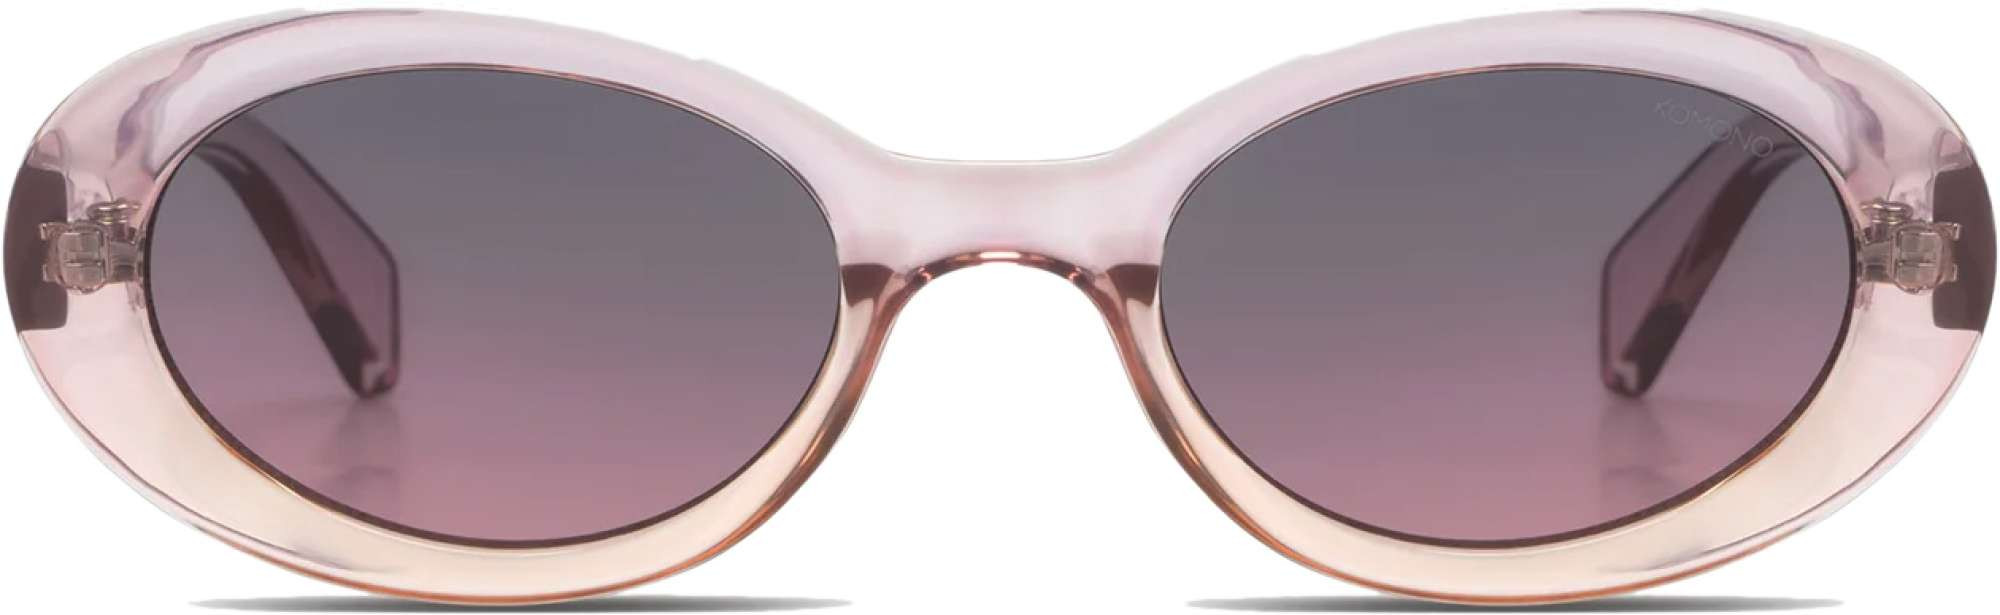 Afbeelding van Komono Ana blush sunglasses